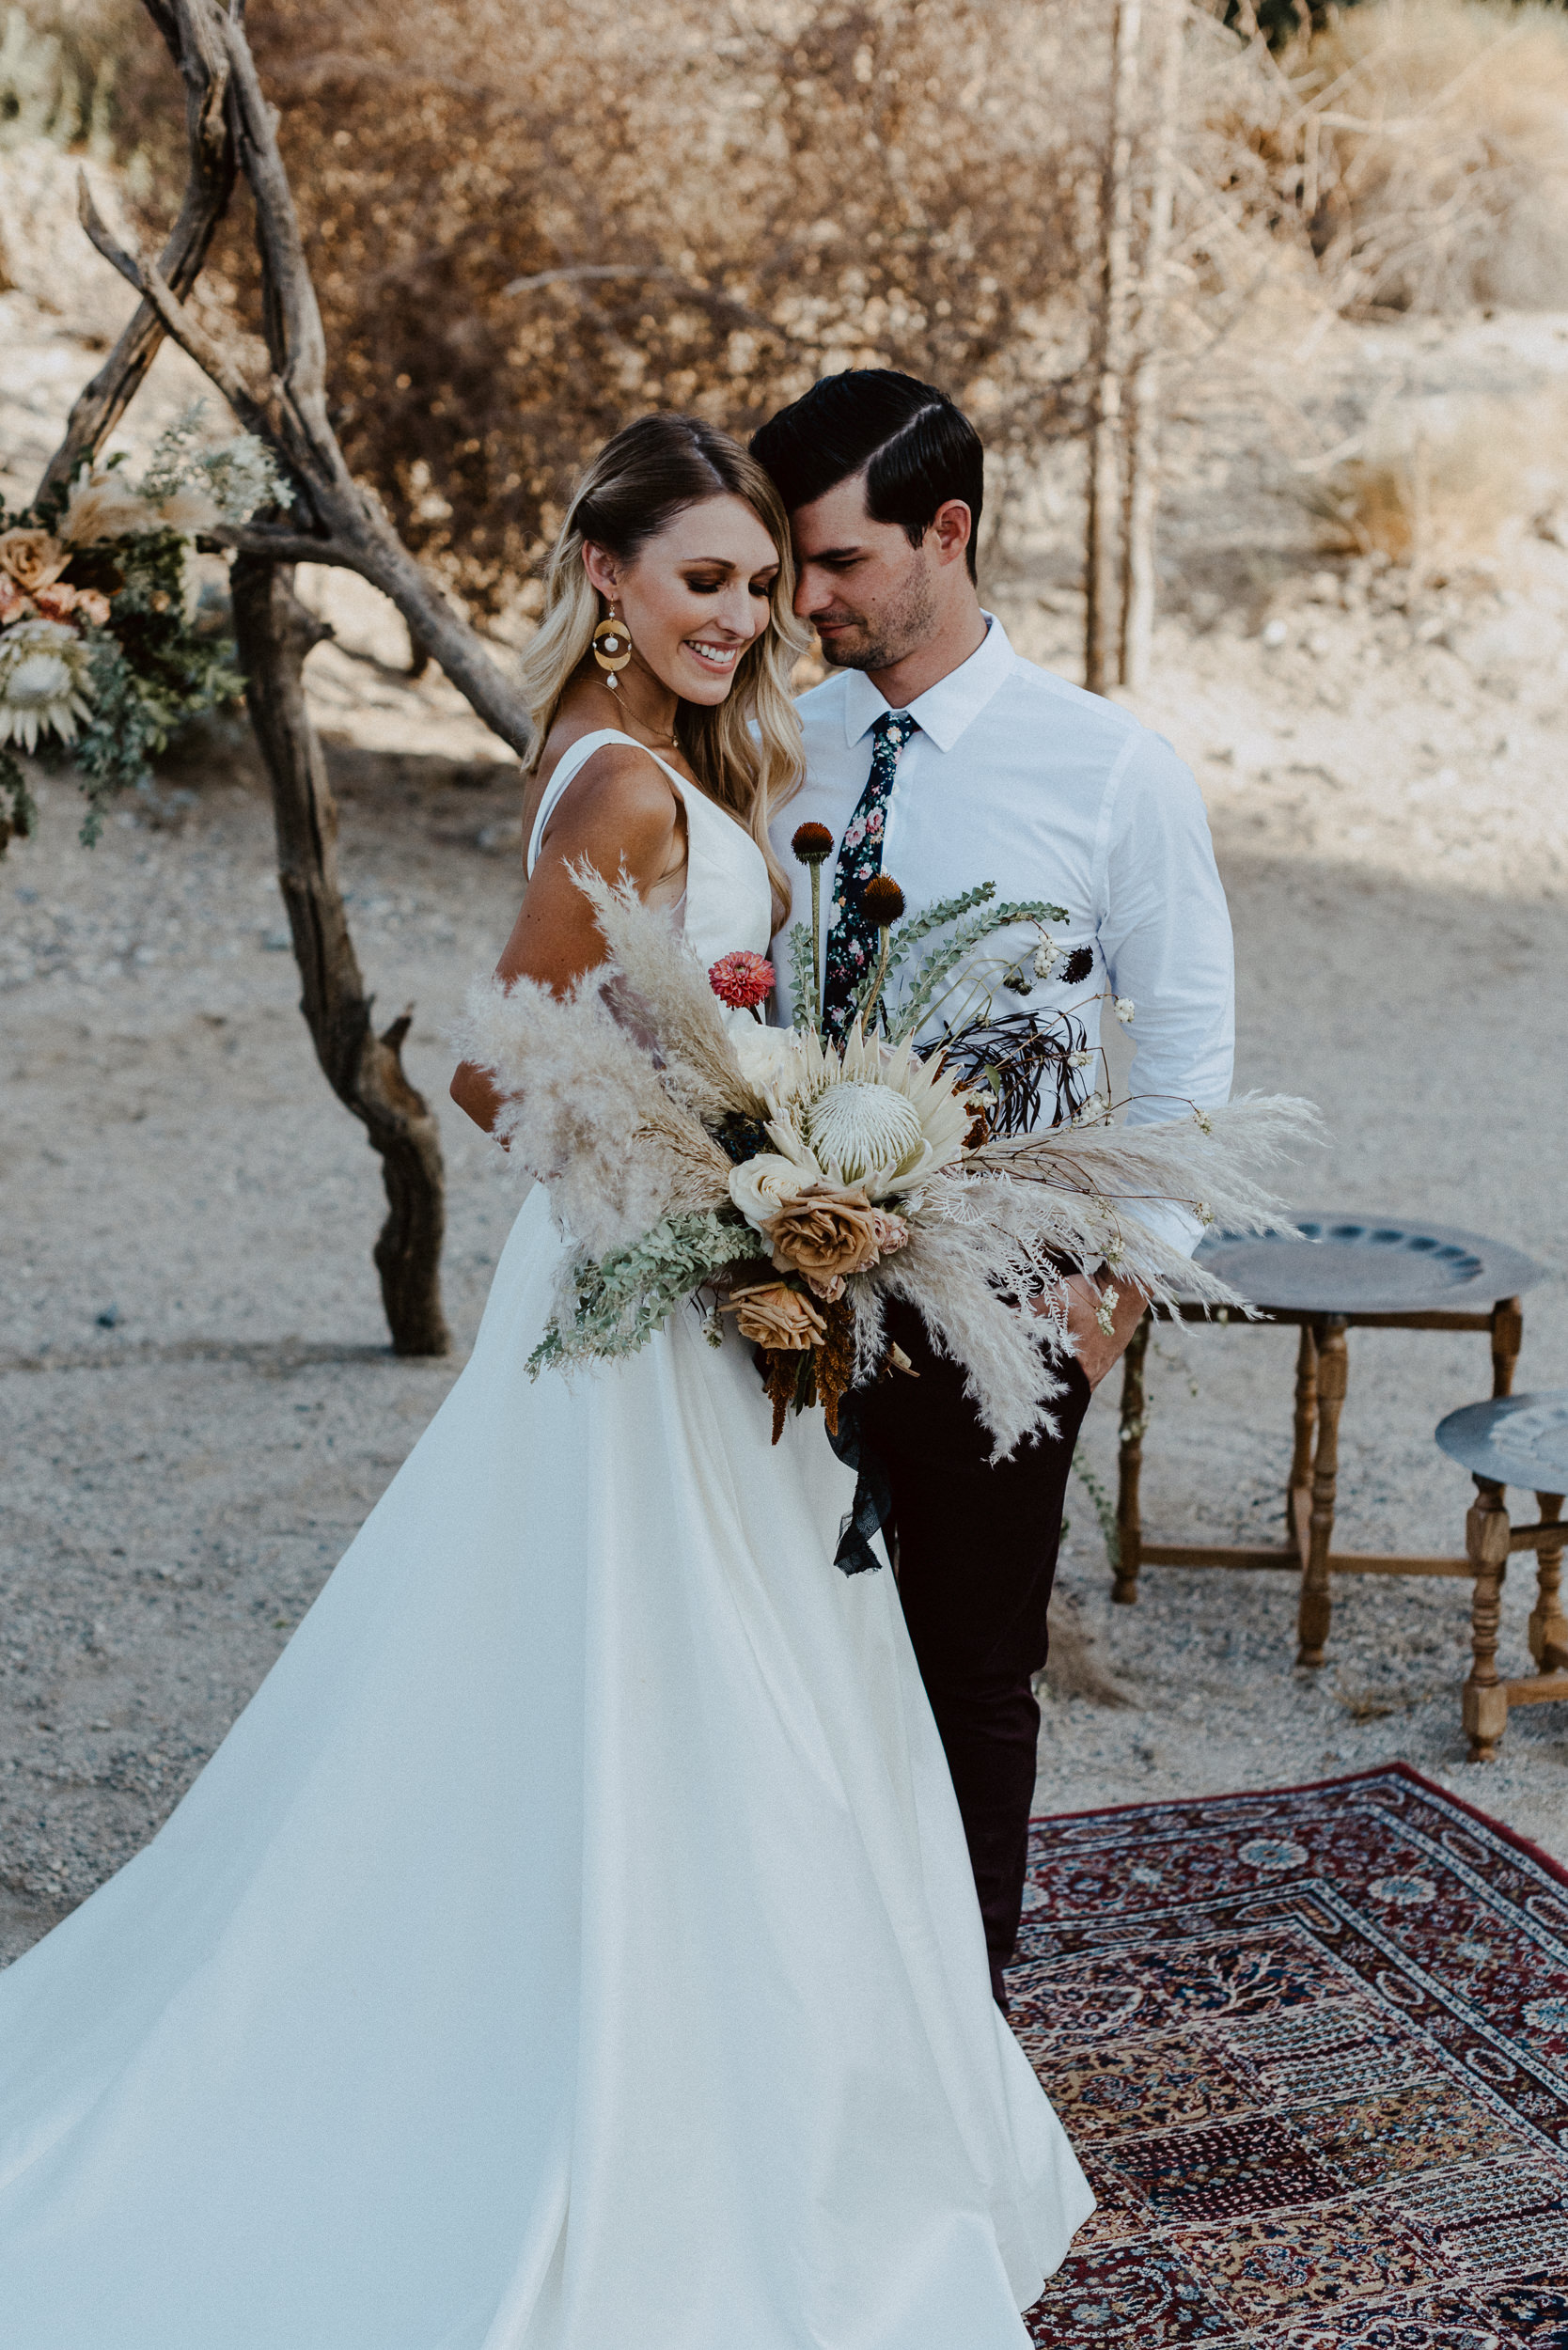 sChelsie + Chris - The Desert Shootout Wedding Romantics at The Living Desert-47.jpg